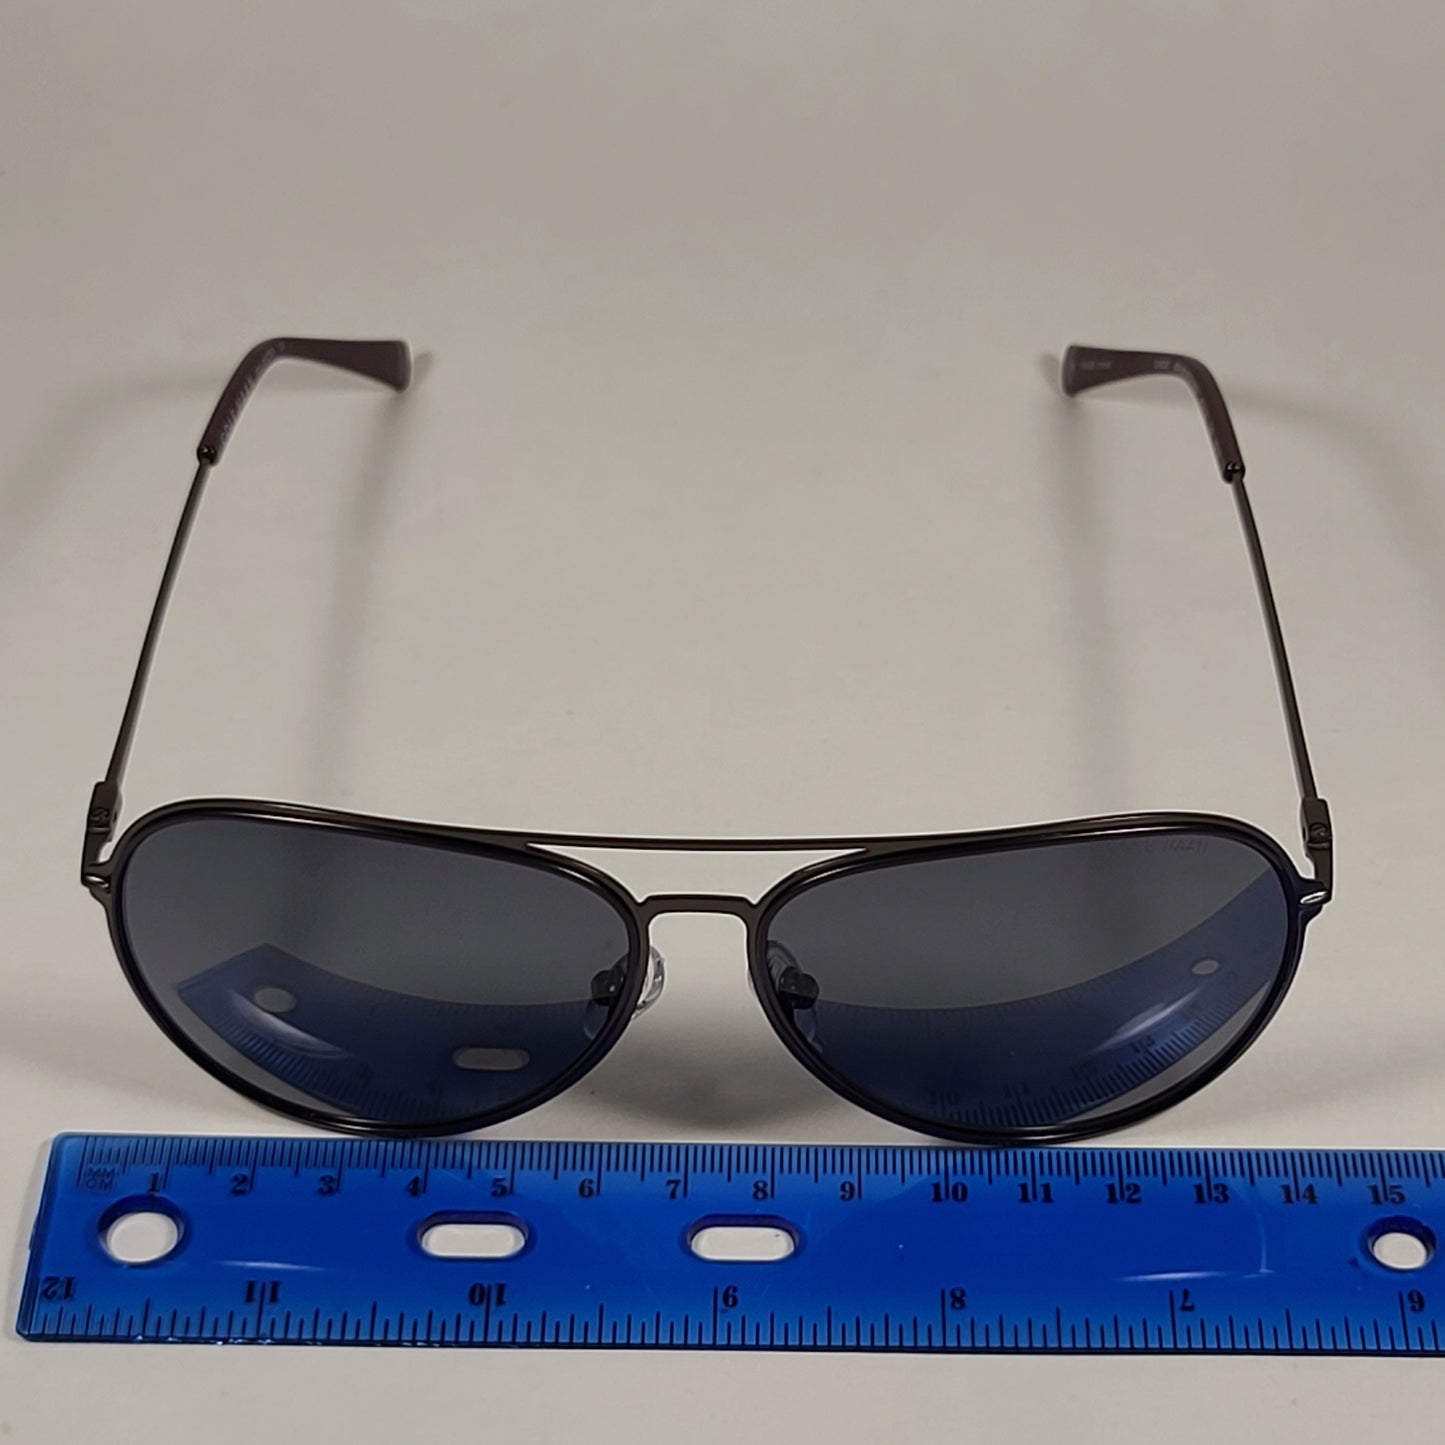 Cole Haan Polarized Aviator Sunglasses Gunmetal And Burgundy Frame Gray Lens CH8007 604 Burgundy - Sunglasses